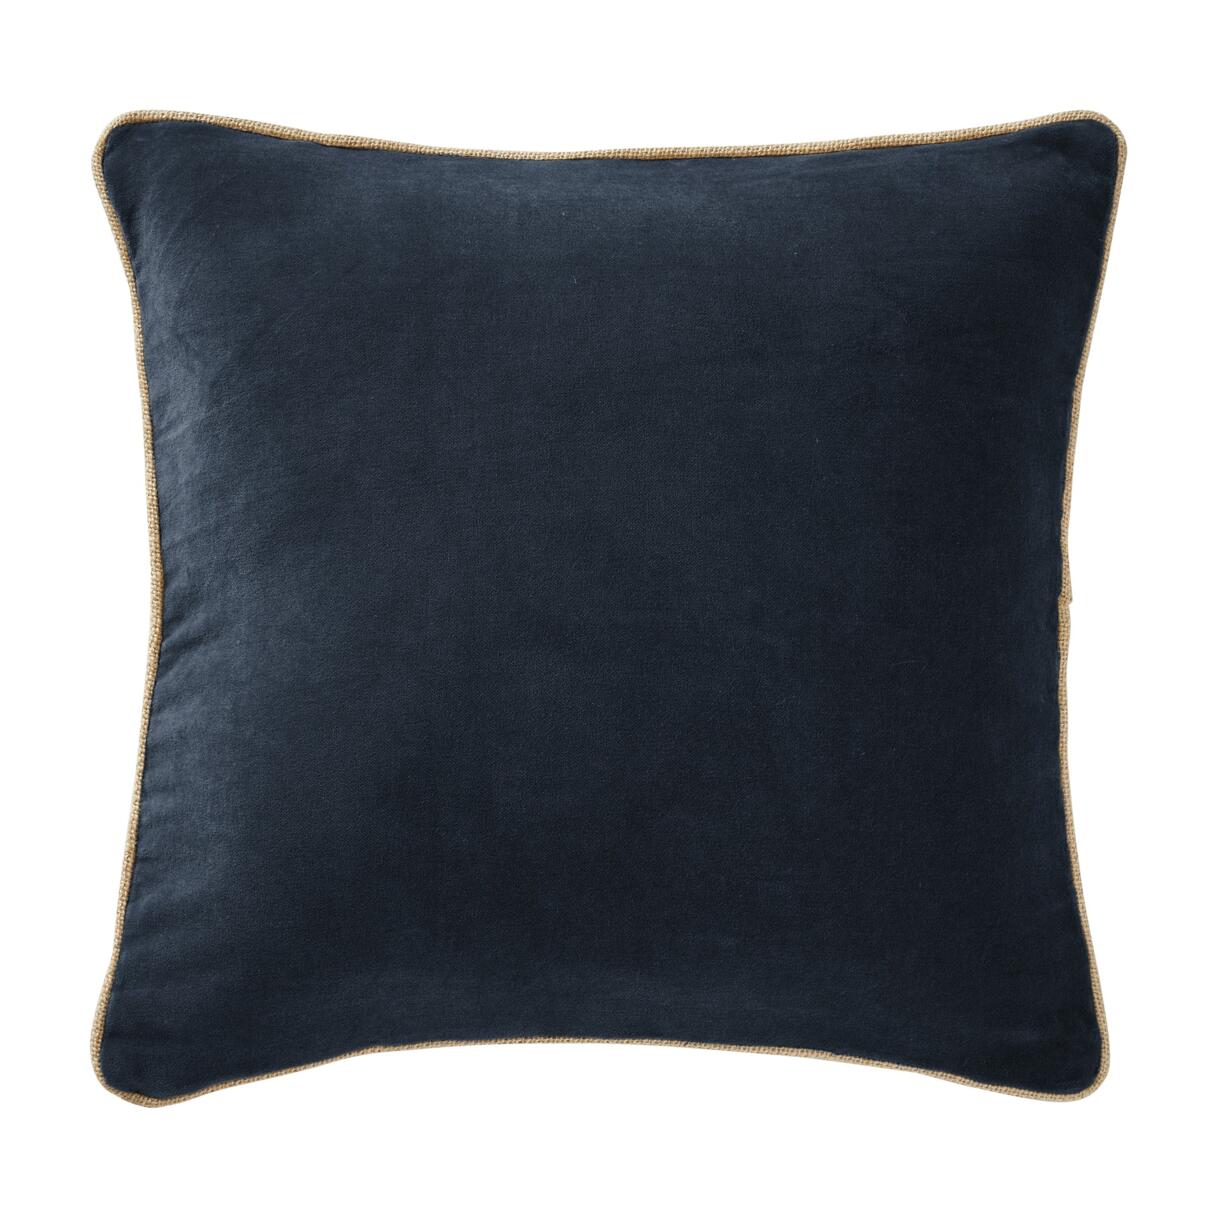 Cojín cuadrado de terciopelo de algodón (45 cm) César Azul noche